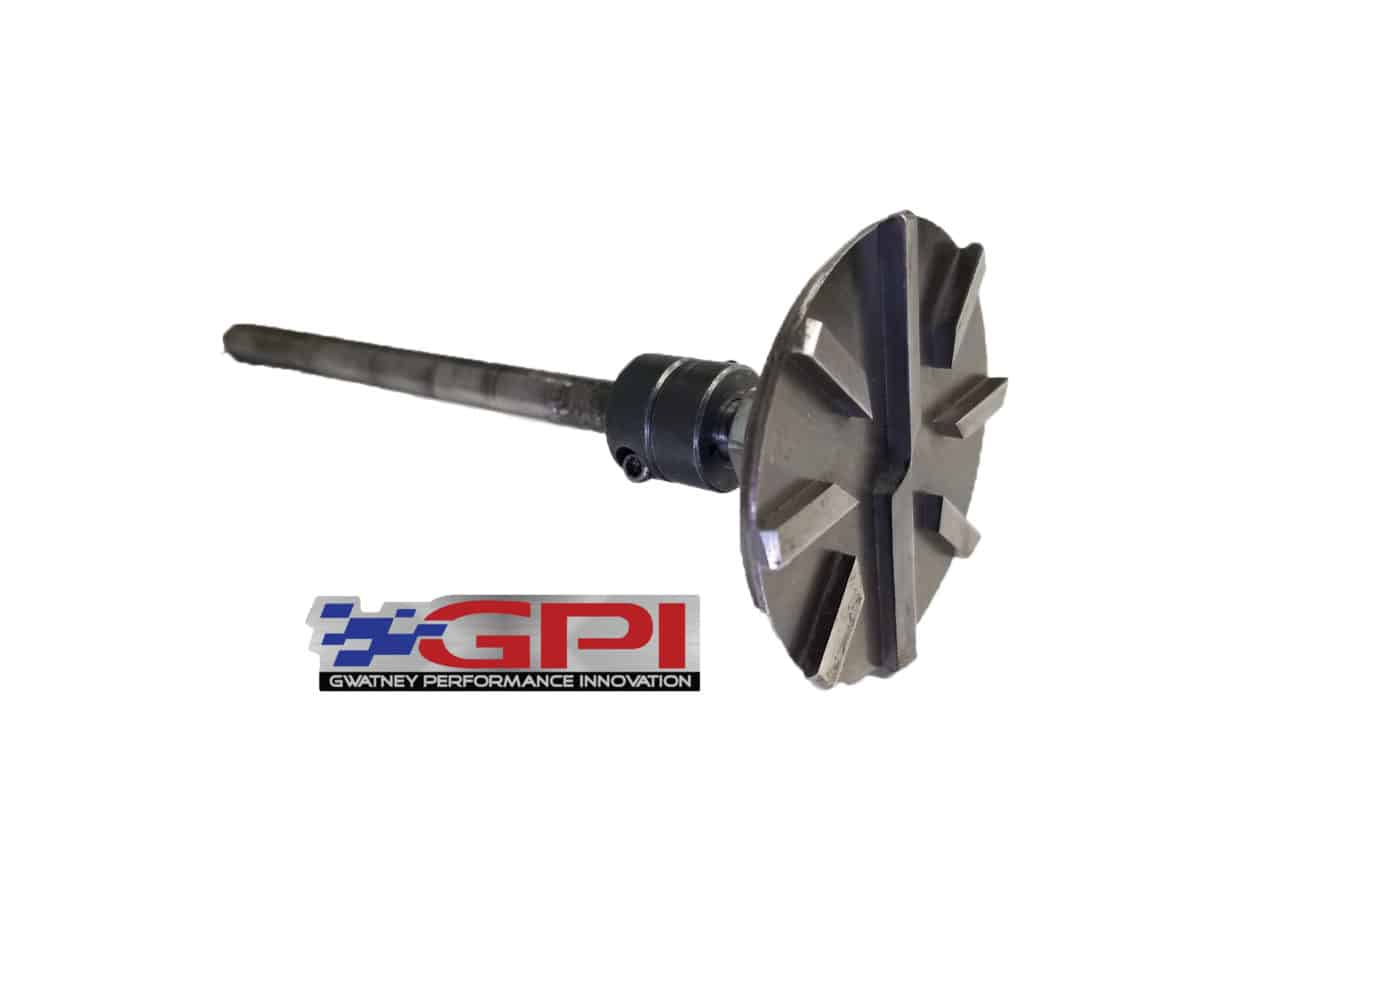 GPI - Piston Flycut Tool - Gwatney Performance